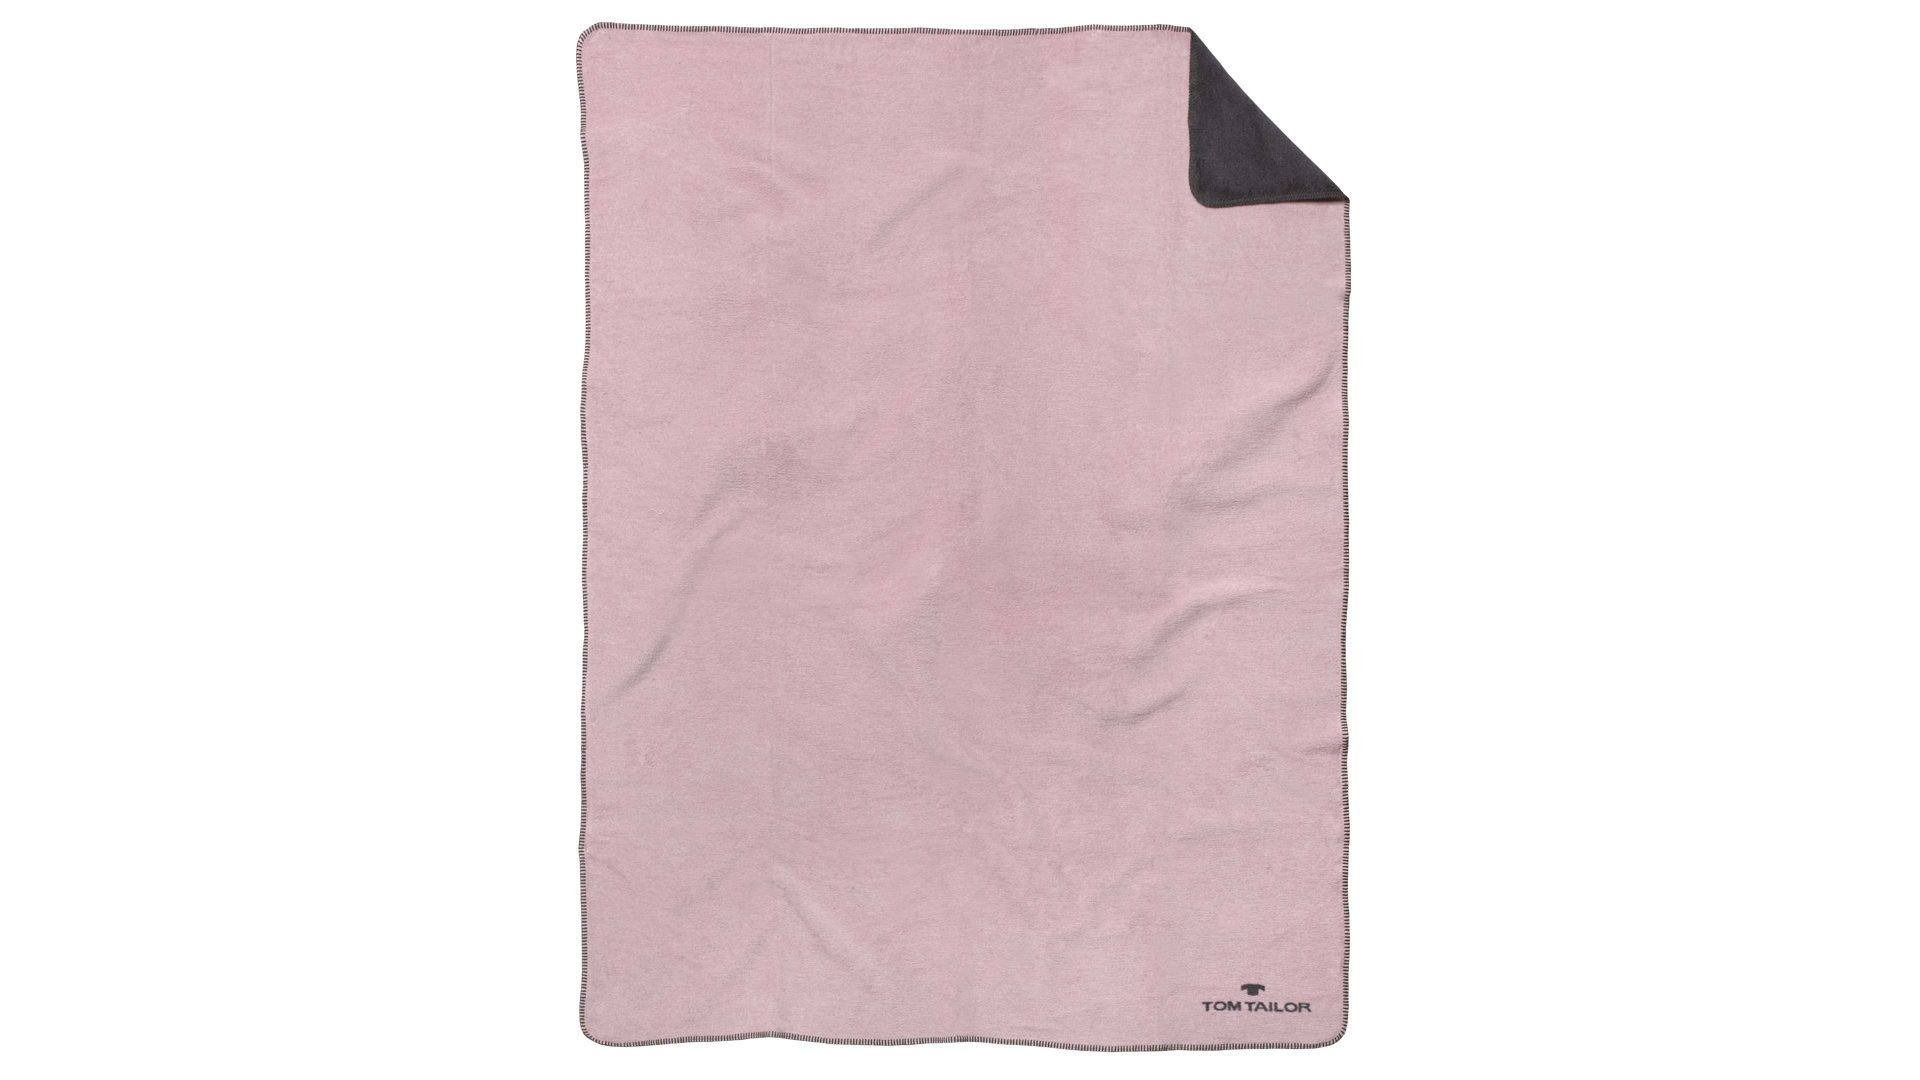 Wohndecke Biberna aus Stoff in Pastell TOM TAILOR Doubleface-Decke rosefarbenes & dunkelgraues Uni – ca. 150 x 200 cm